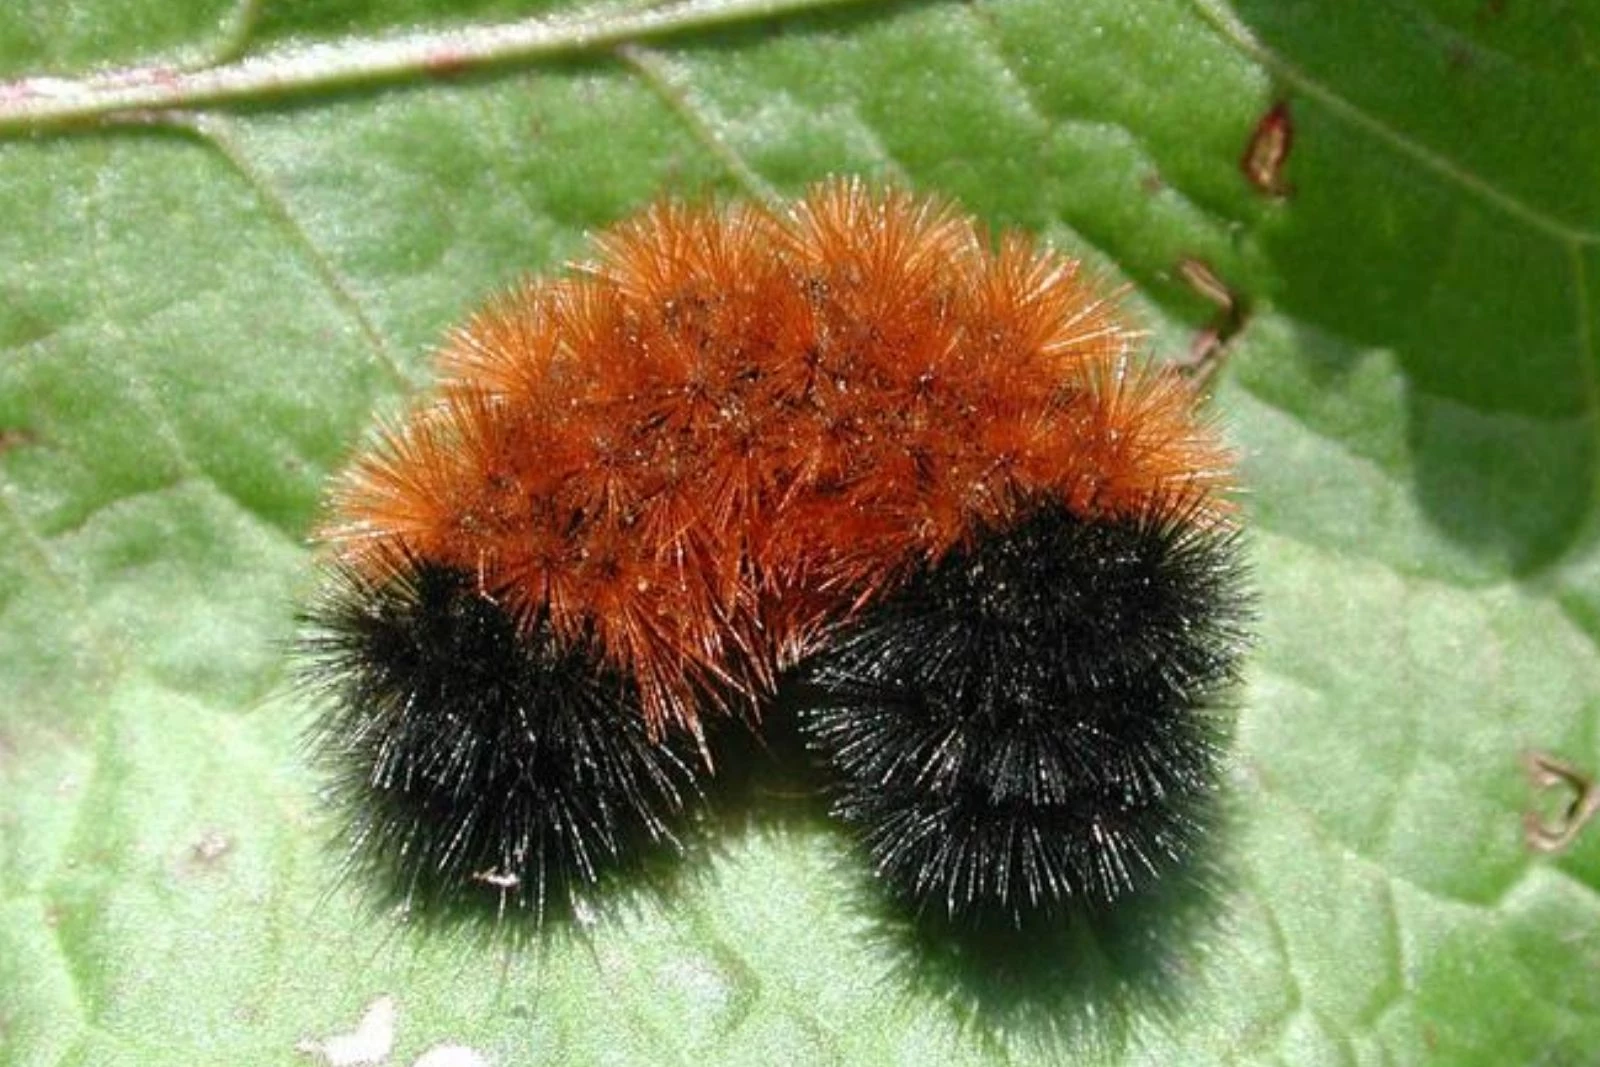 download brown wooly caterpillar